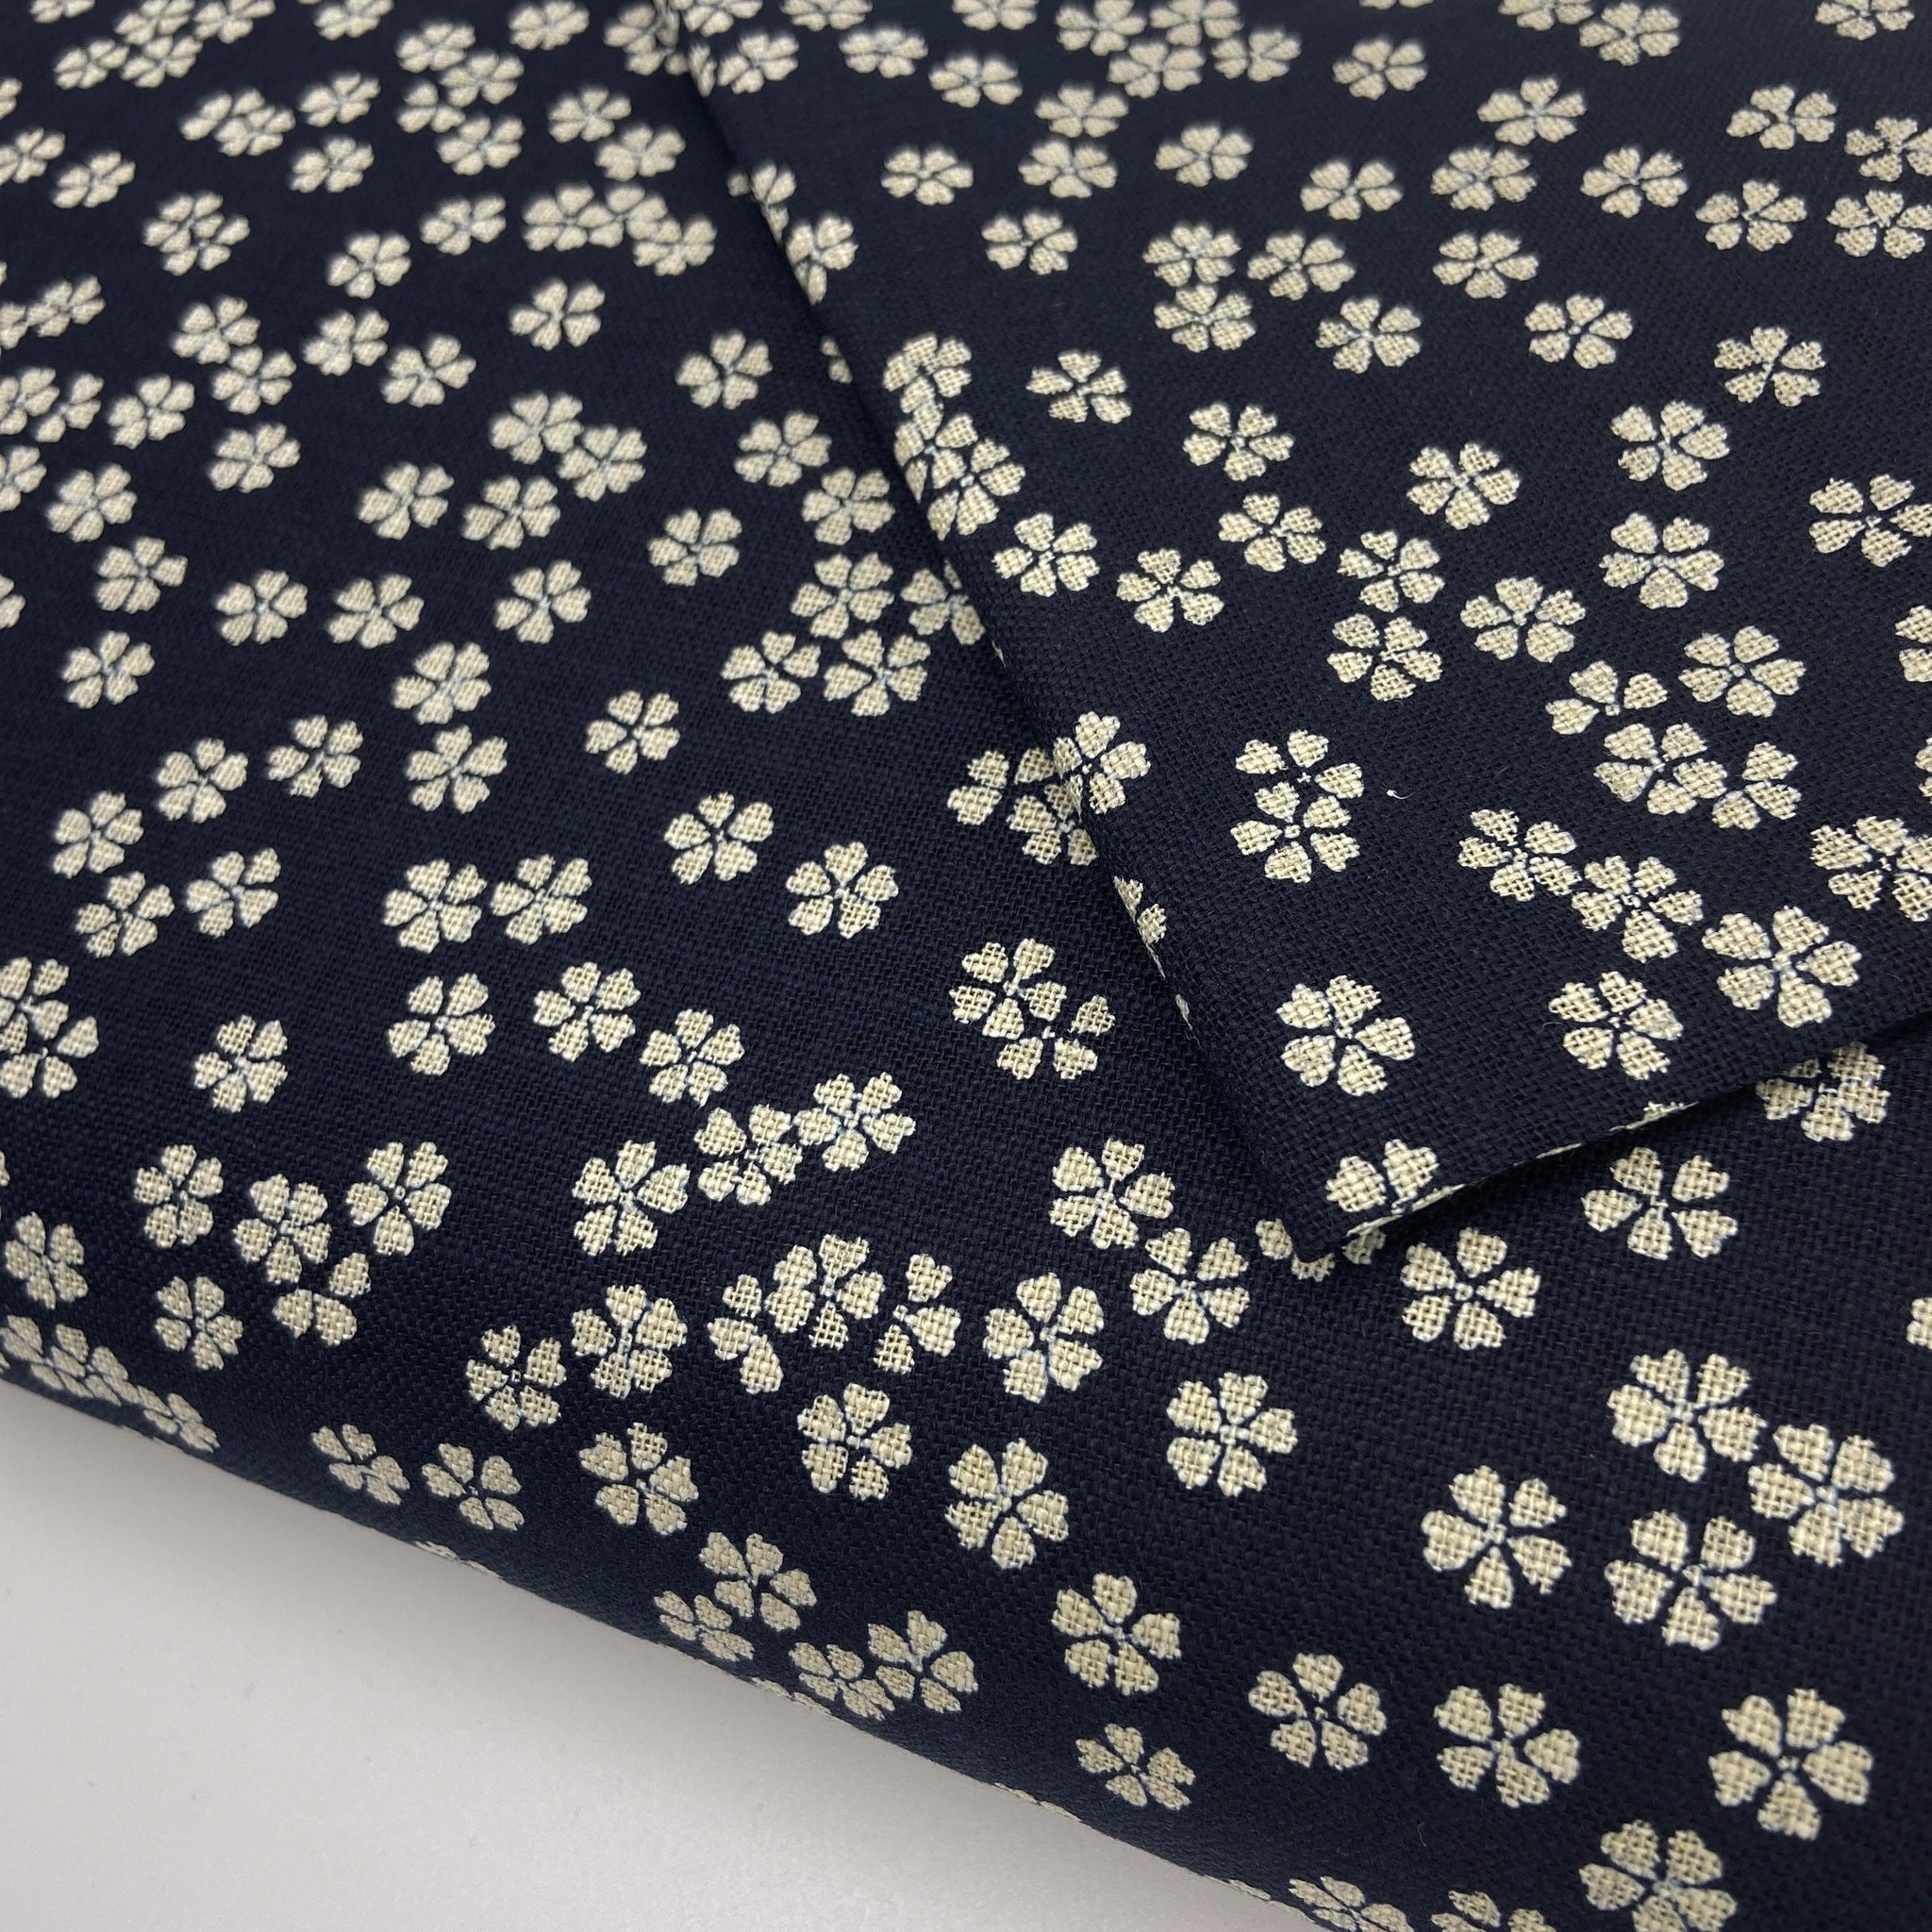 Japanese Cotton Uneven Yarns Sheeting Print - Indigo Cherry Blossoms